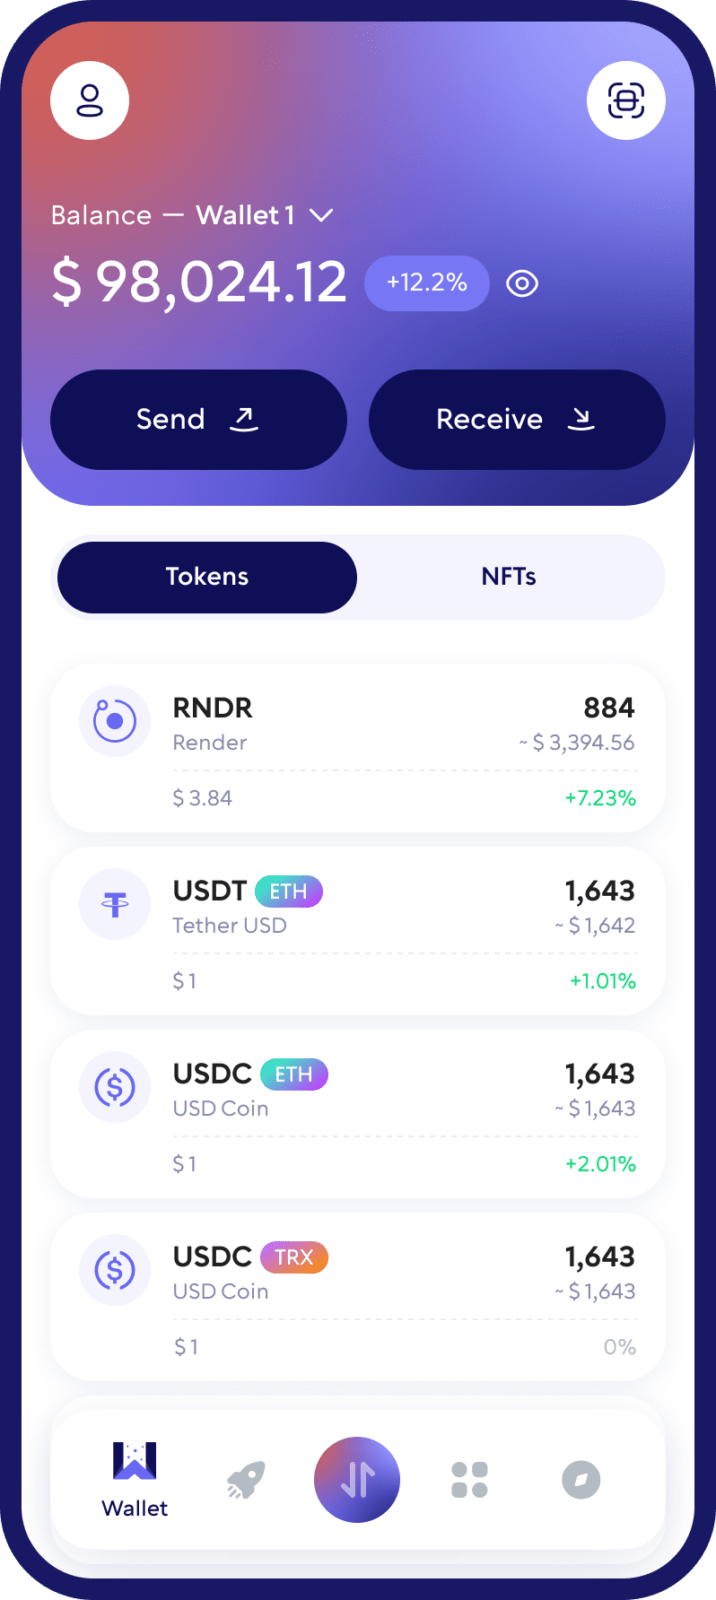 Render (RNDR) Cryptocurrency Wallet Walletverse